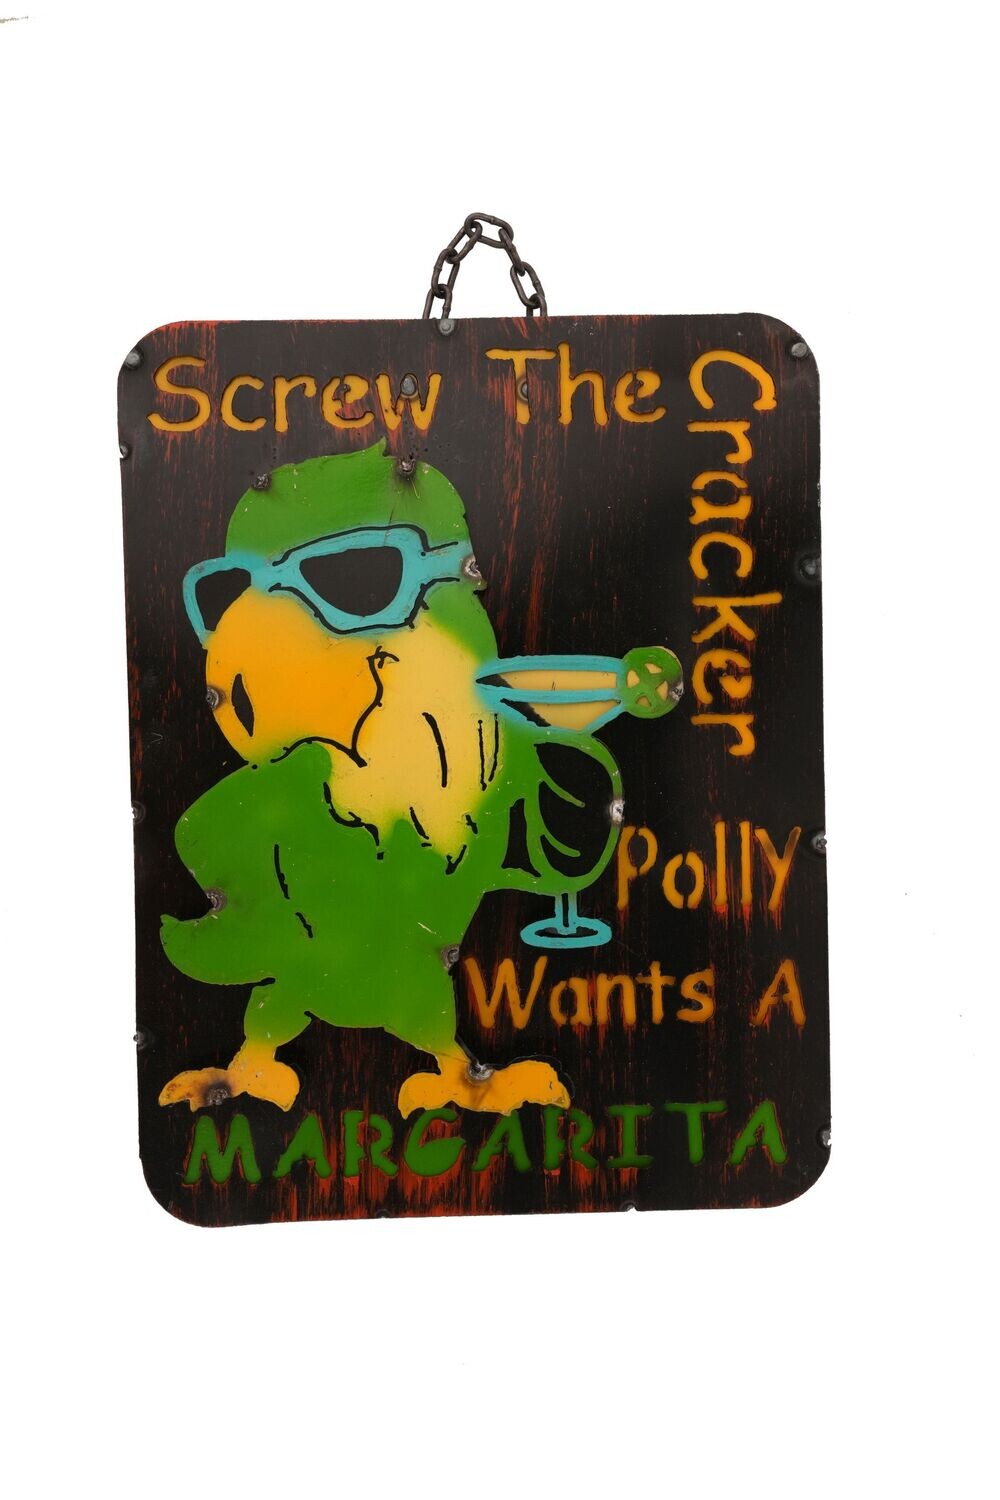 Polly Wants a Margarita Metal Sign-12x15 in-Garden-Margarita